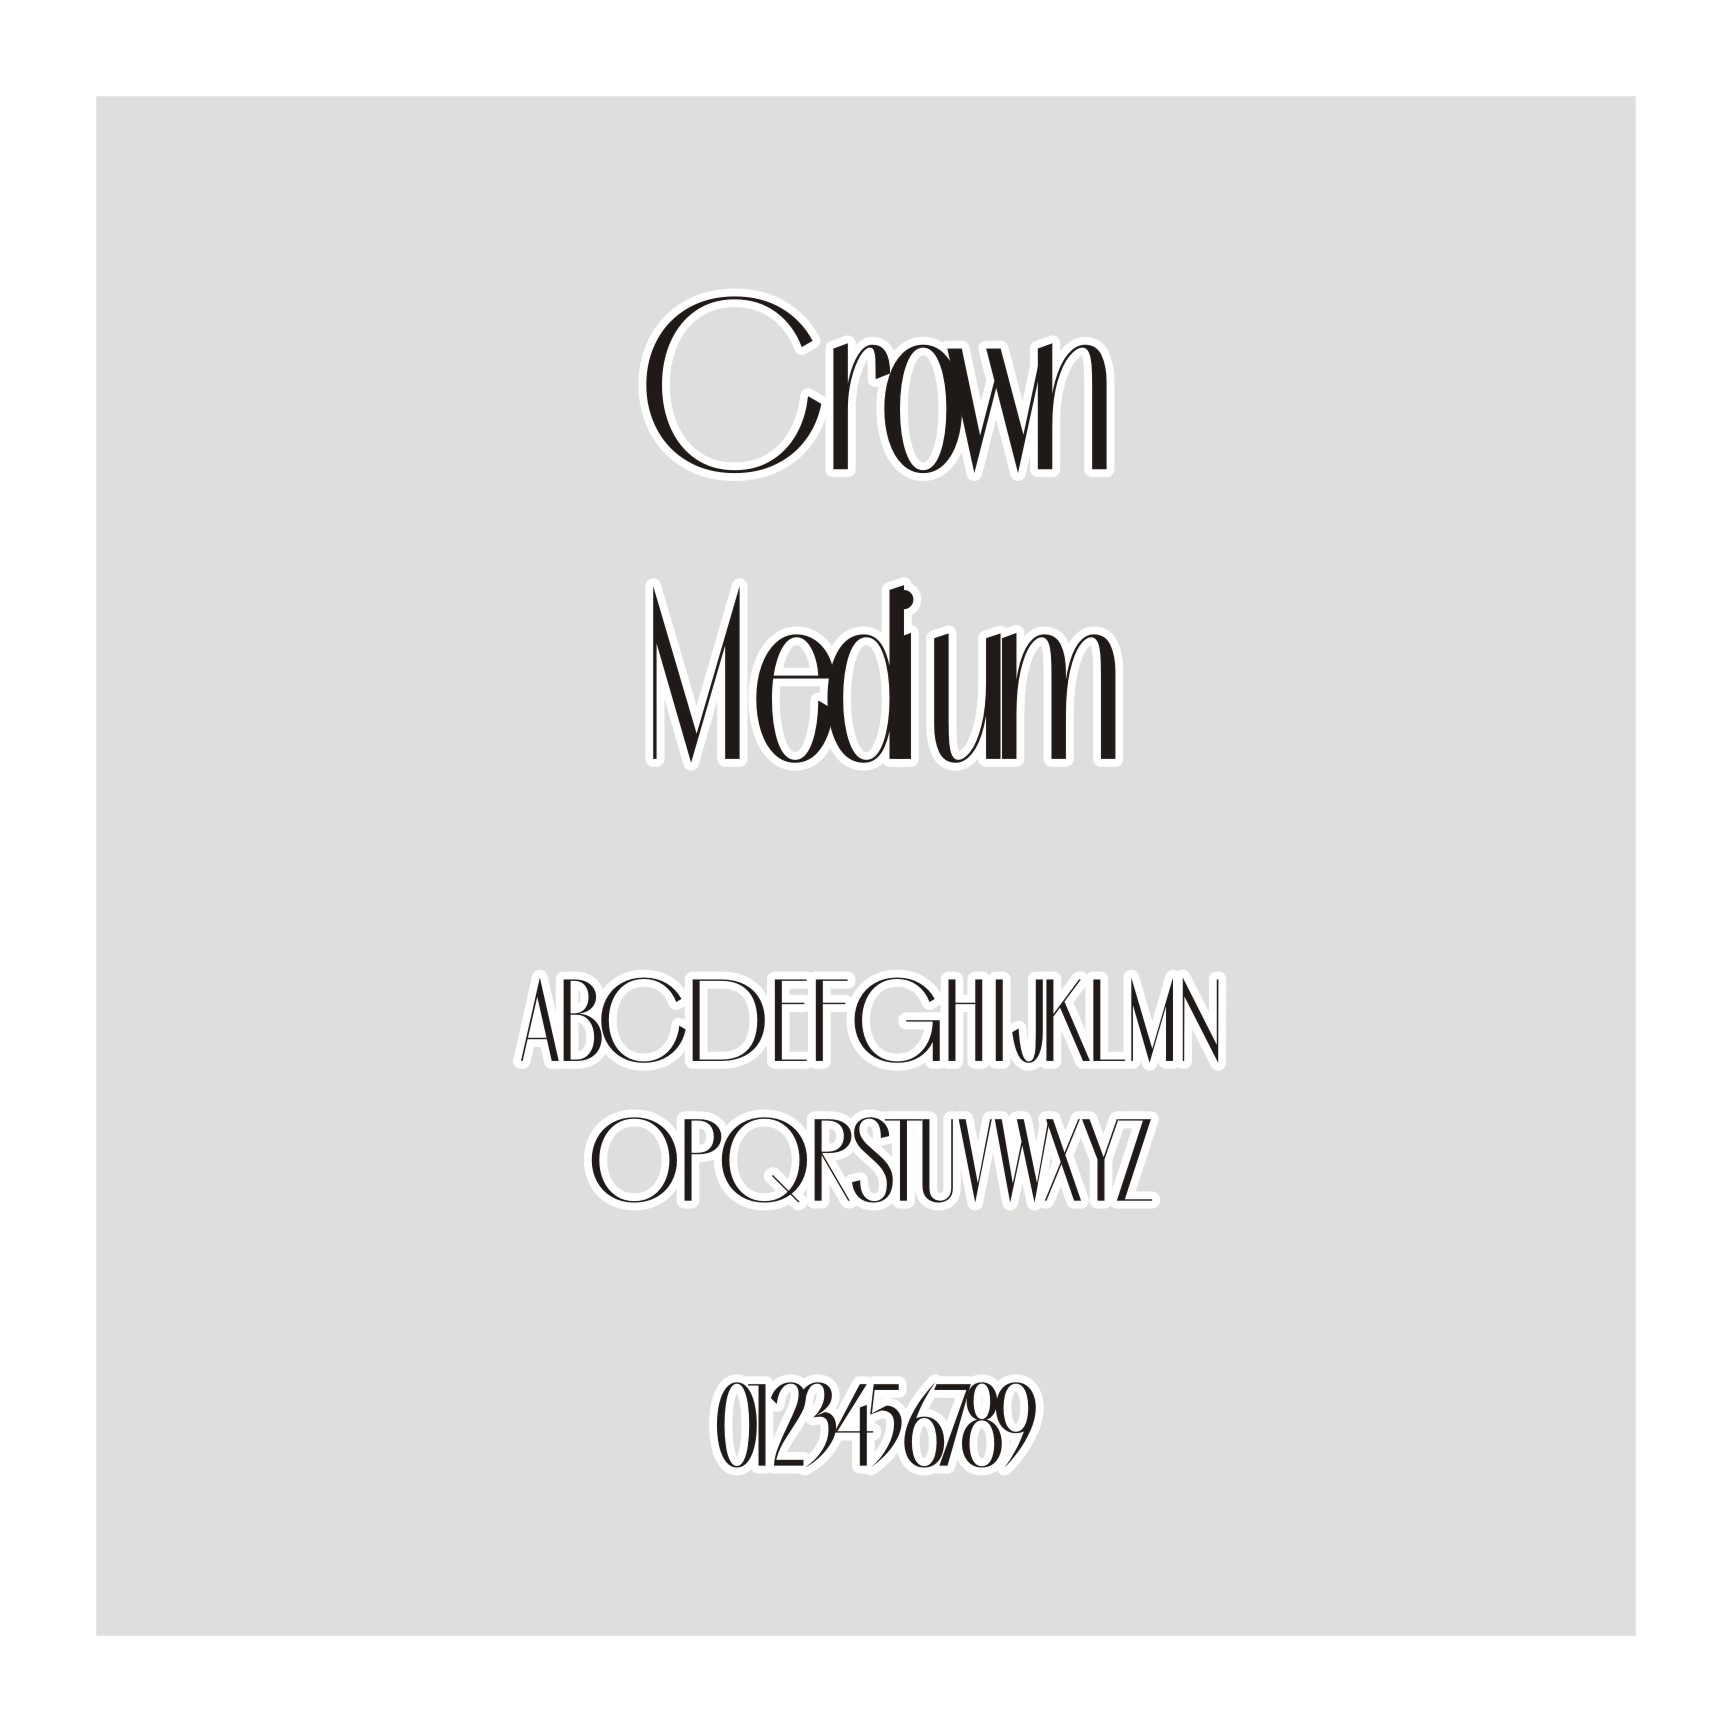 Crown Medium